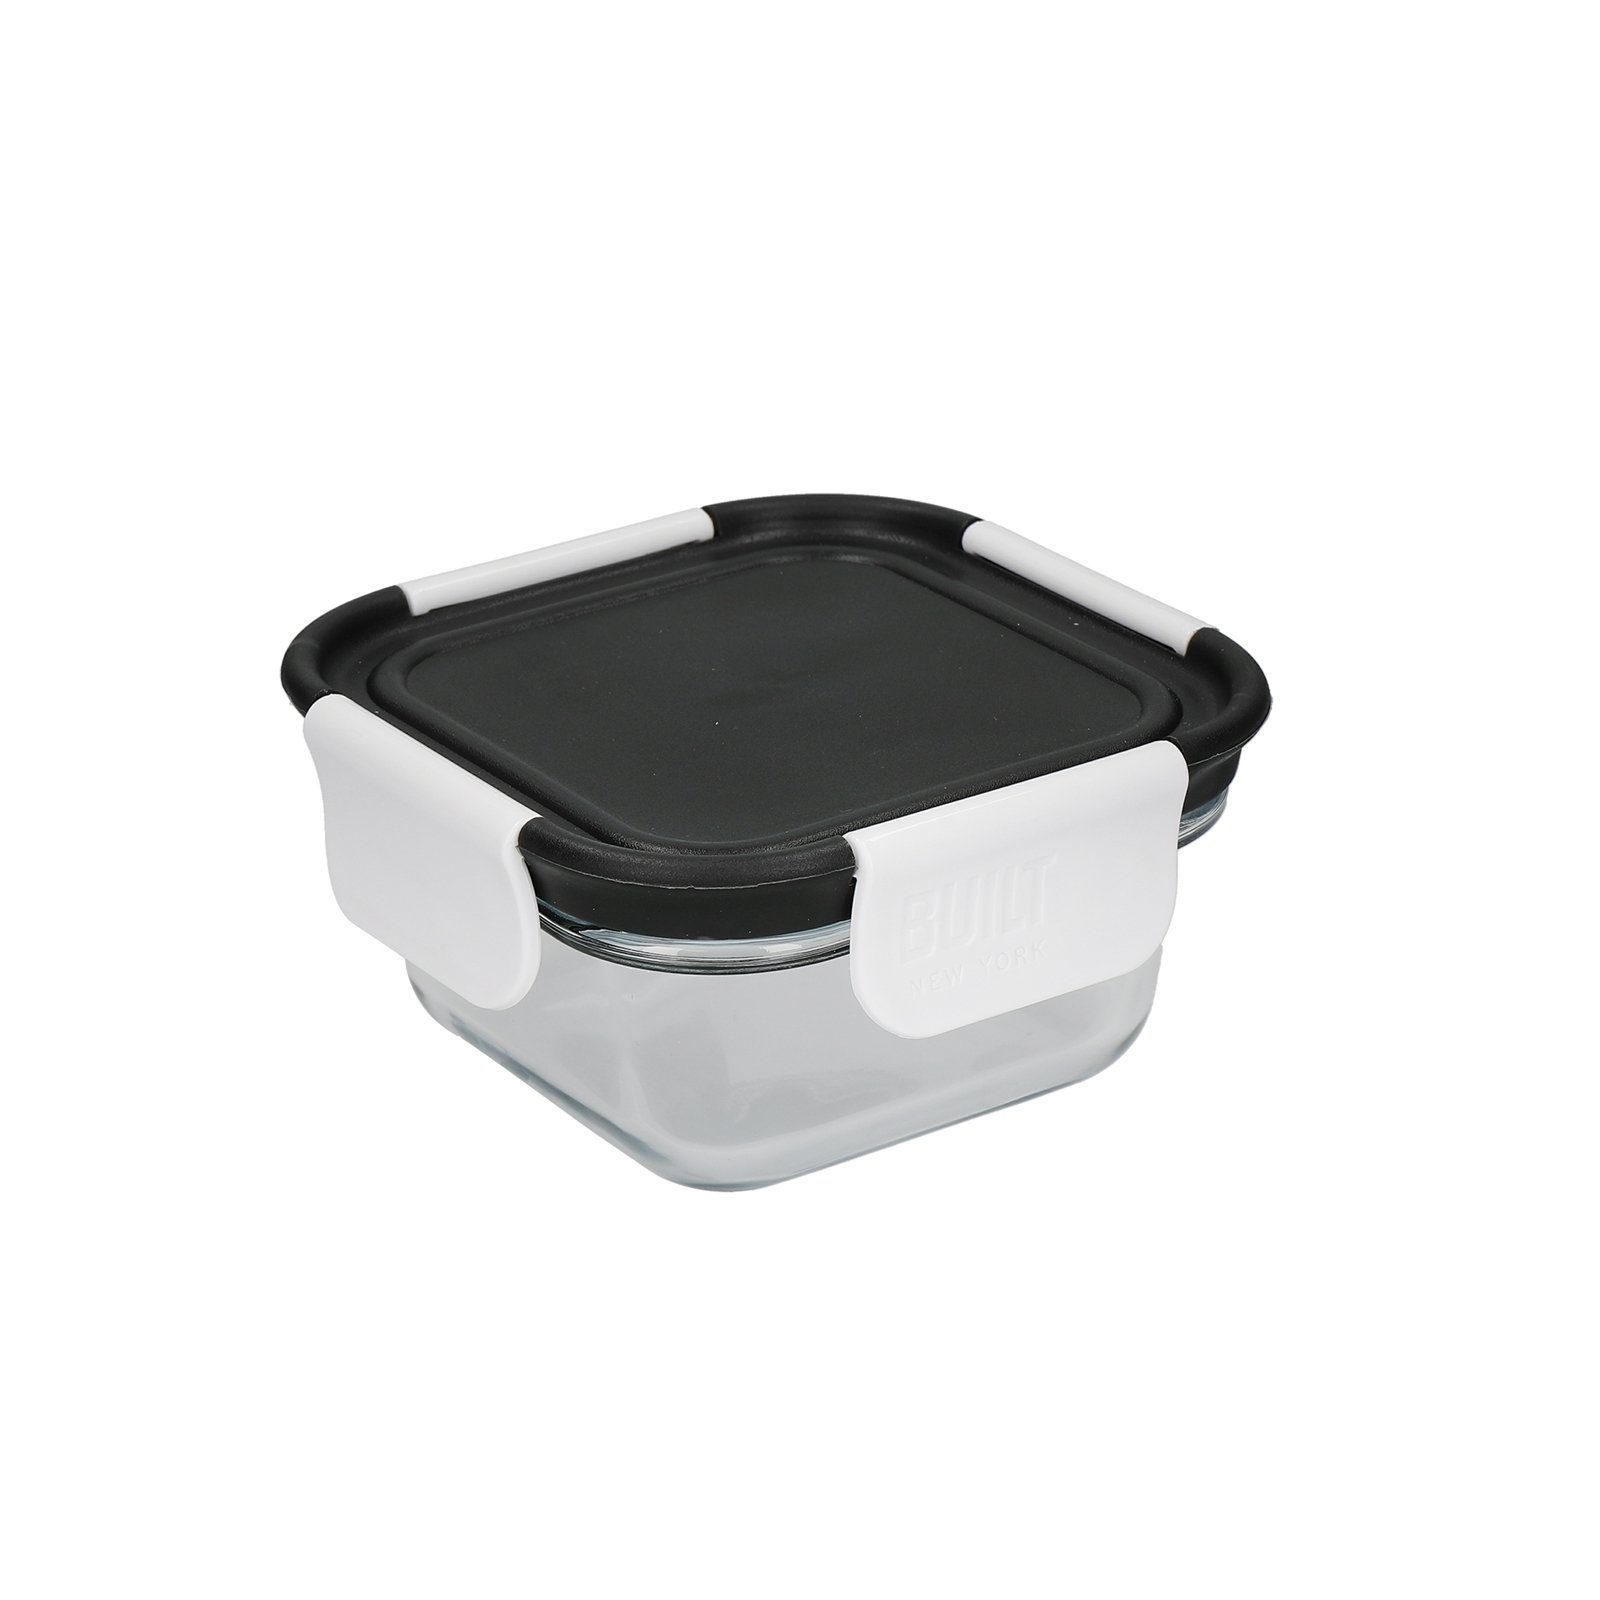 Neuetischkultur Lunchbox Lunchbox 300 ml Professional (1-tlg) Kunststoff, Glas/Kunststoff, rechteckig, Glas